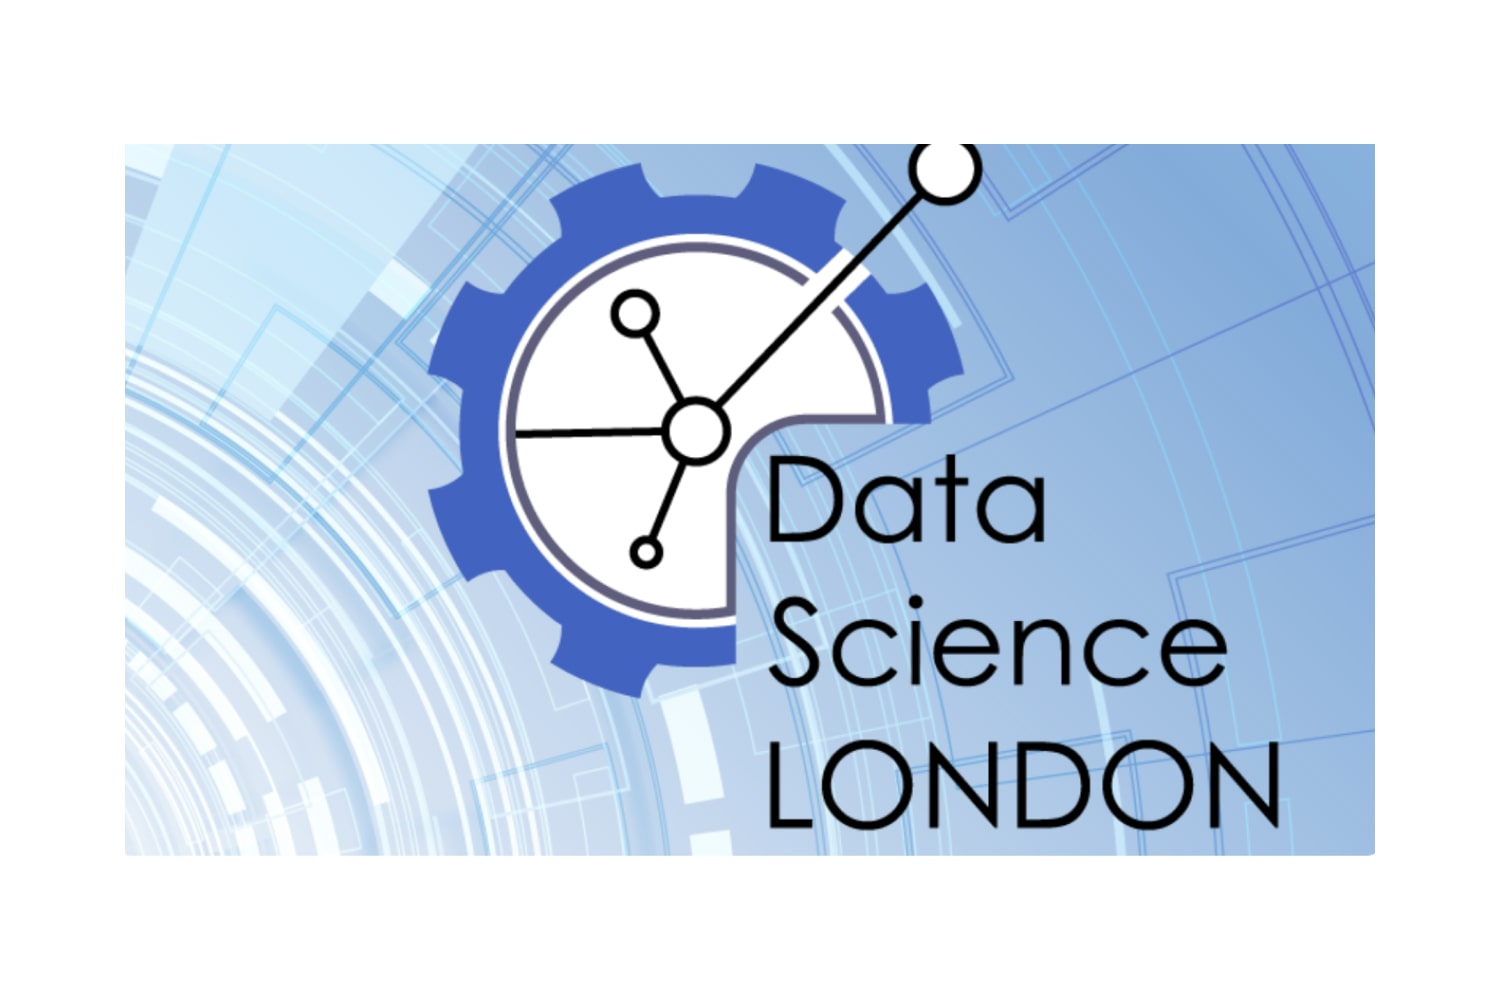 Data Science London logo